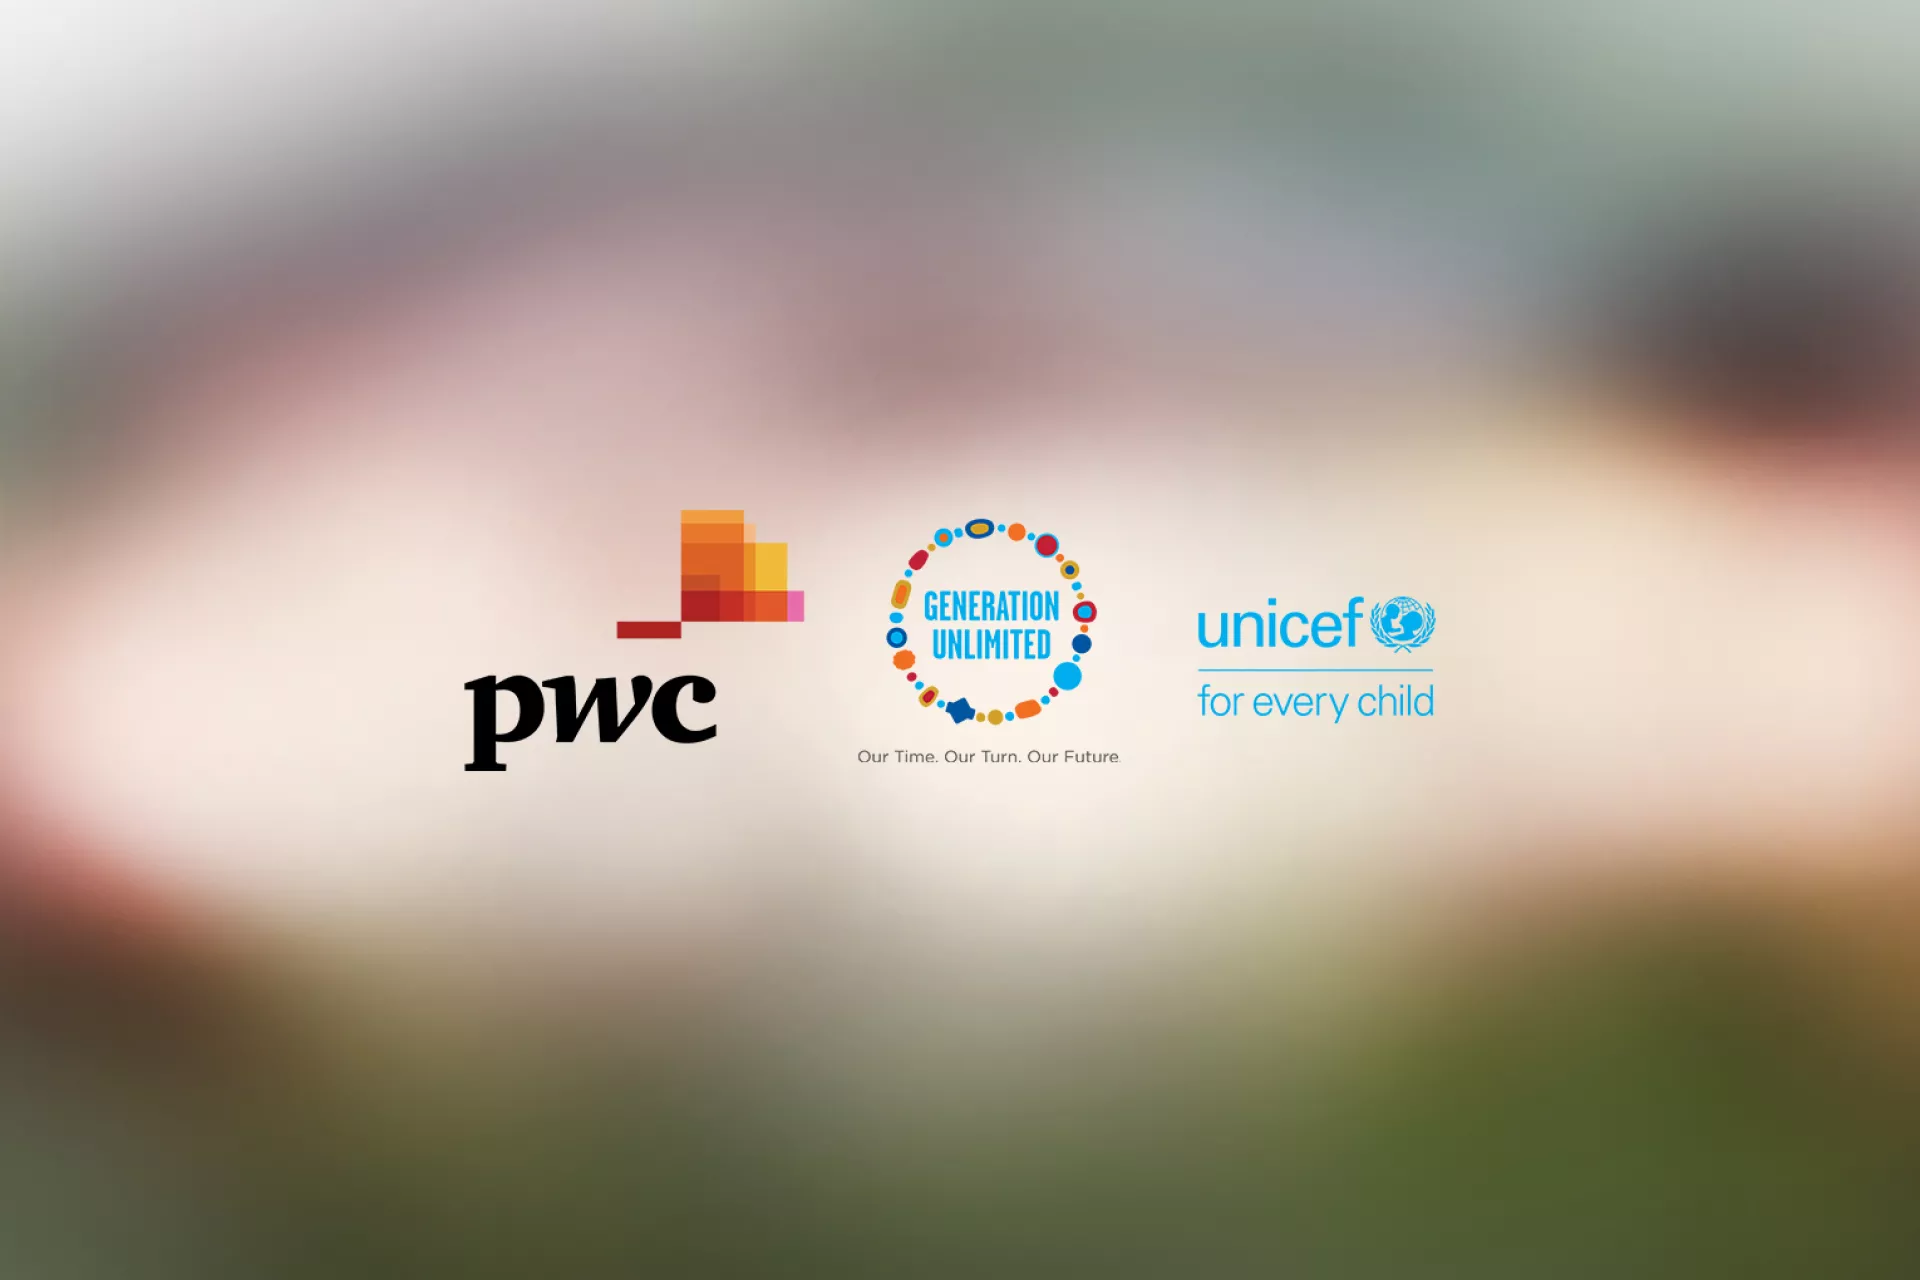 pwc, genU, and UNICEF logos